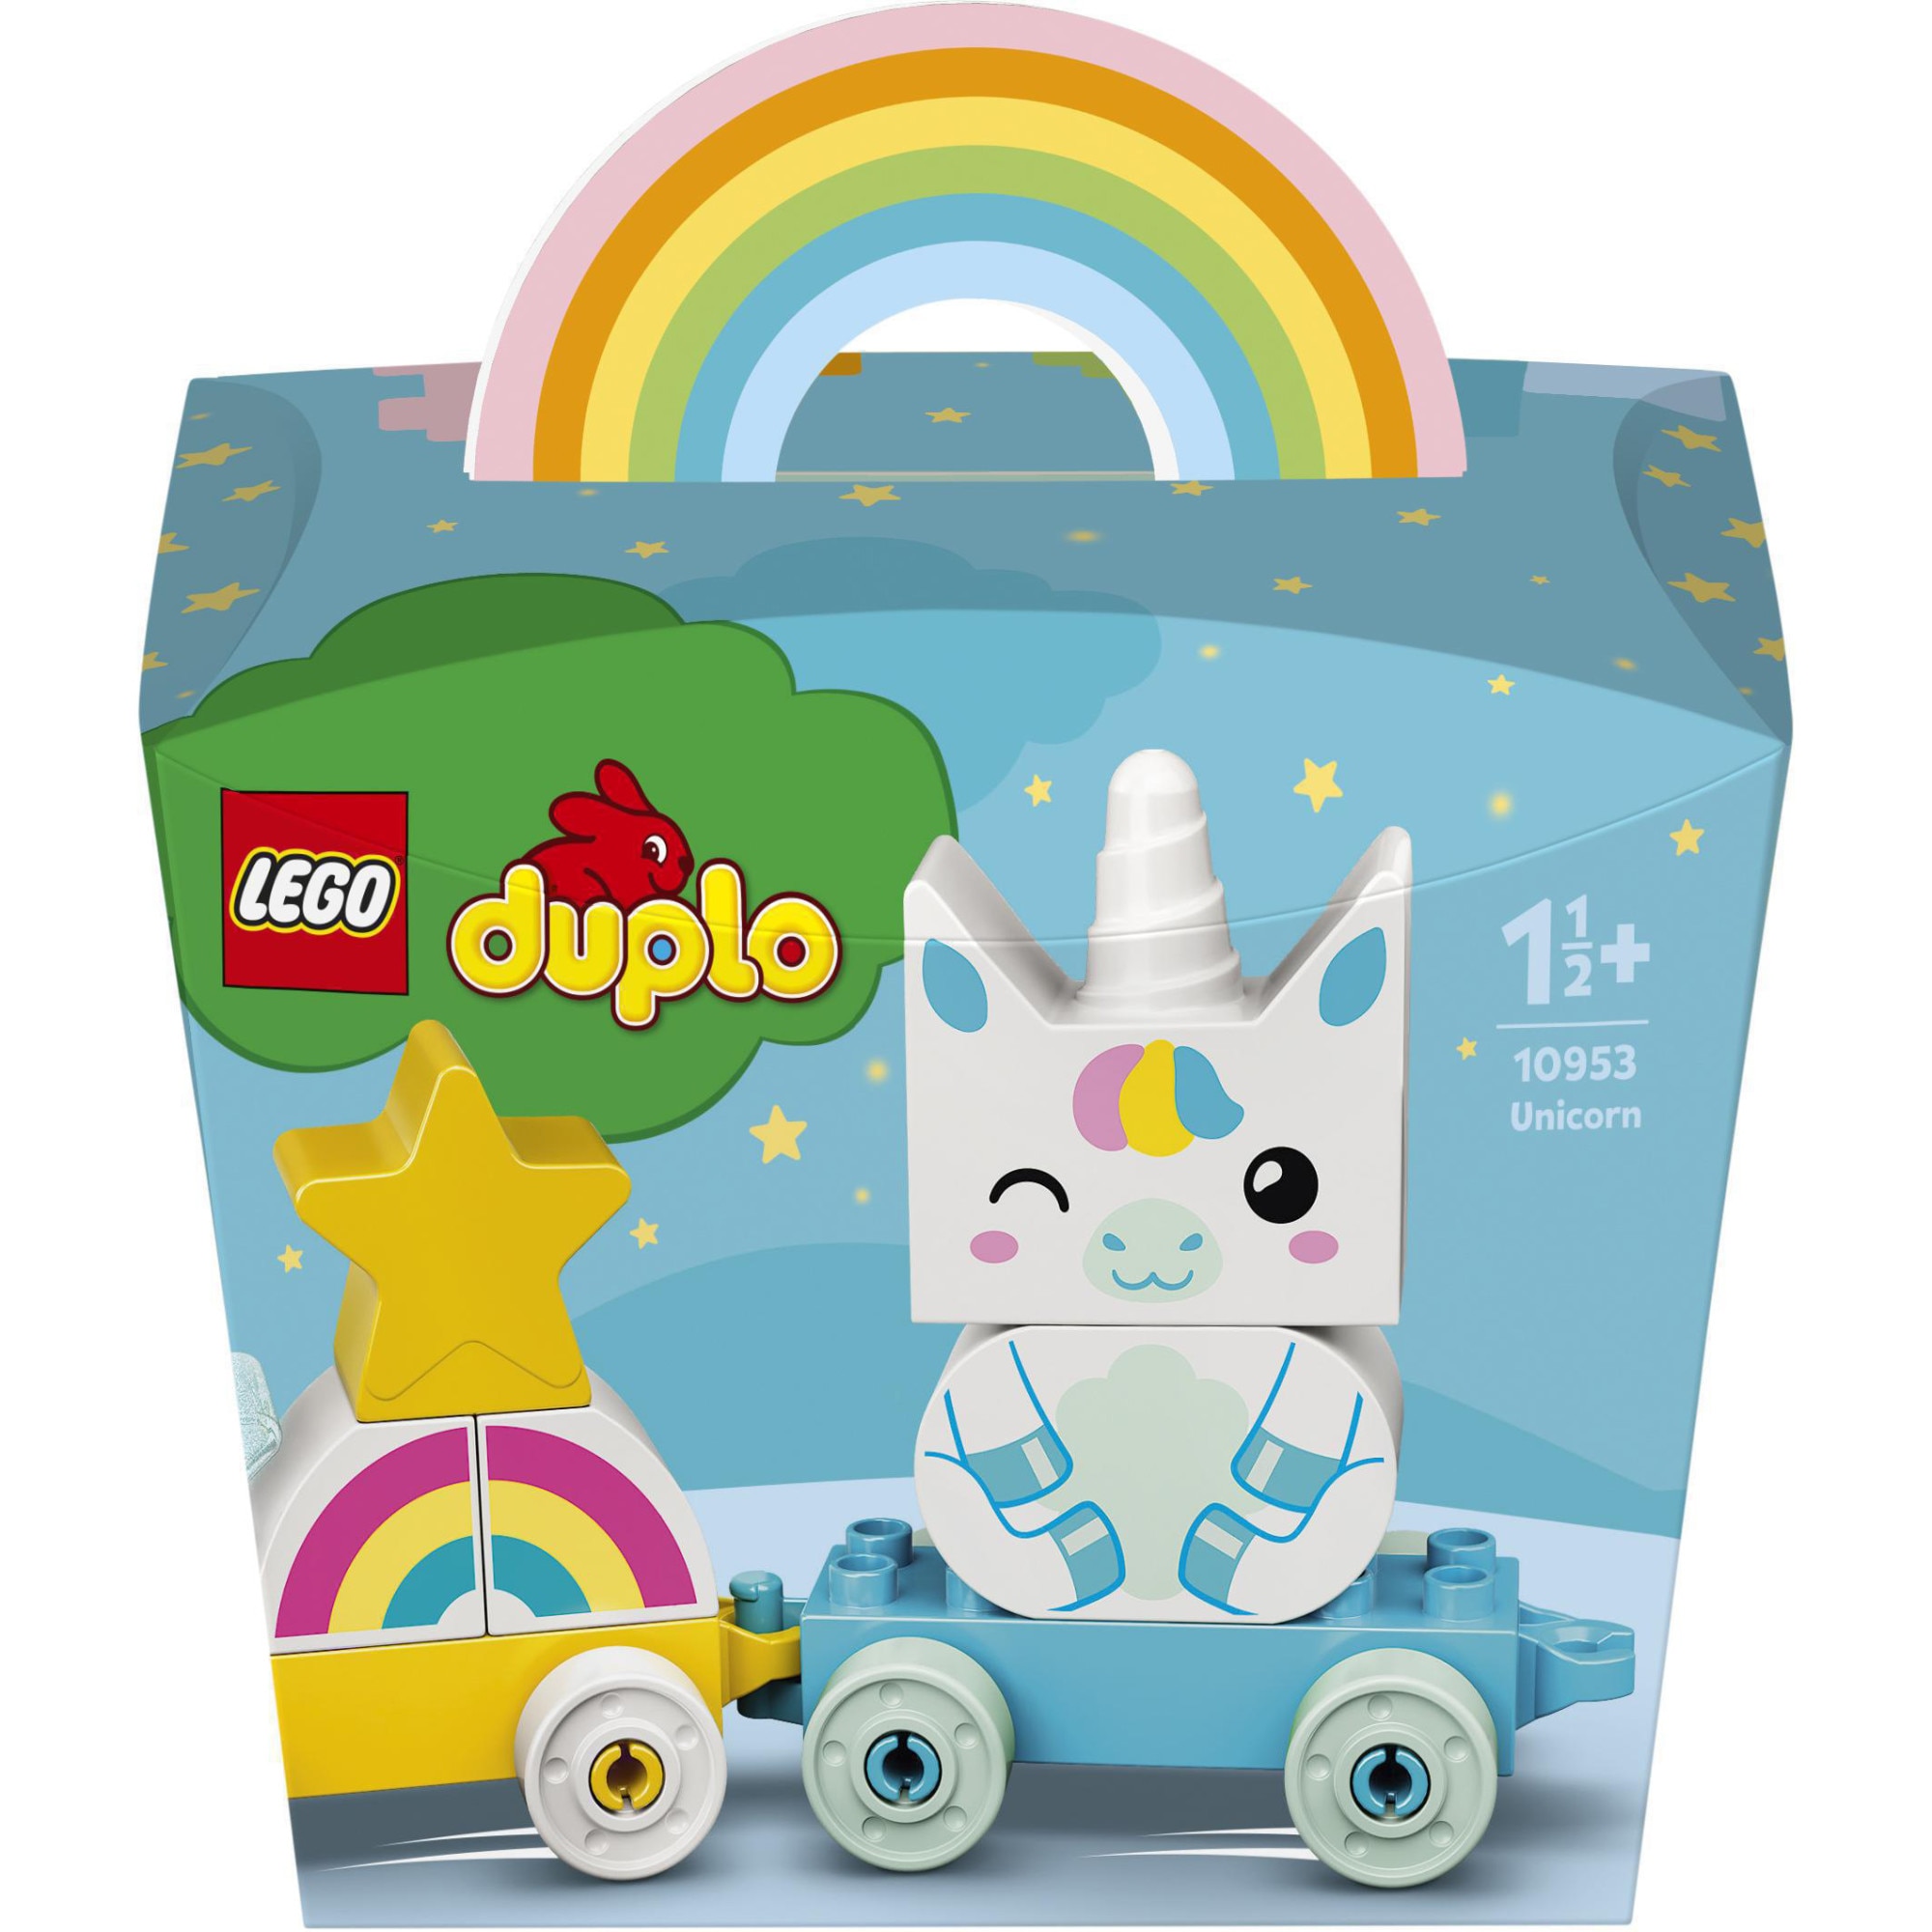 LEGO Duplo 10953 pas cher, La licorne